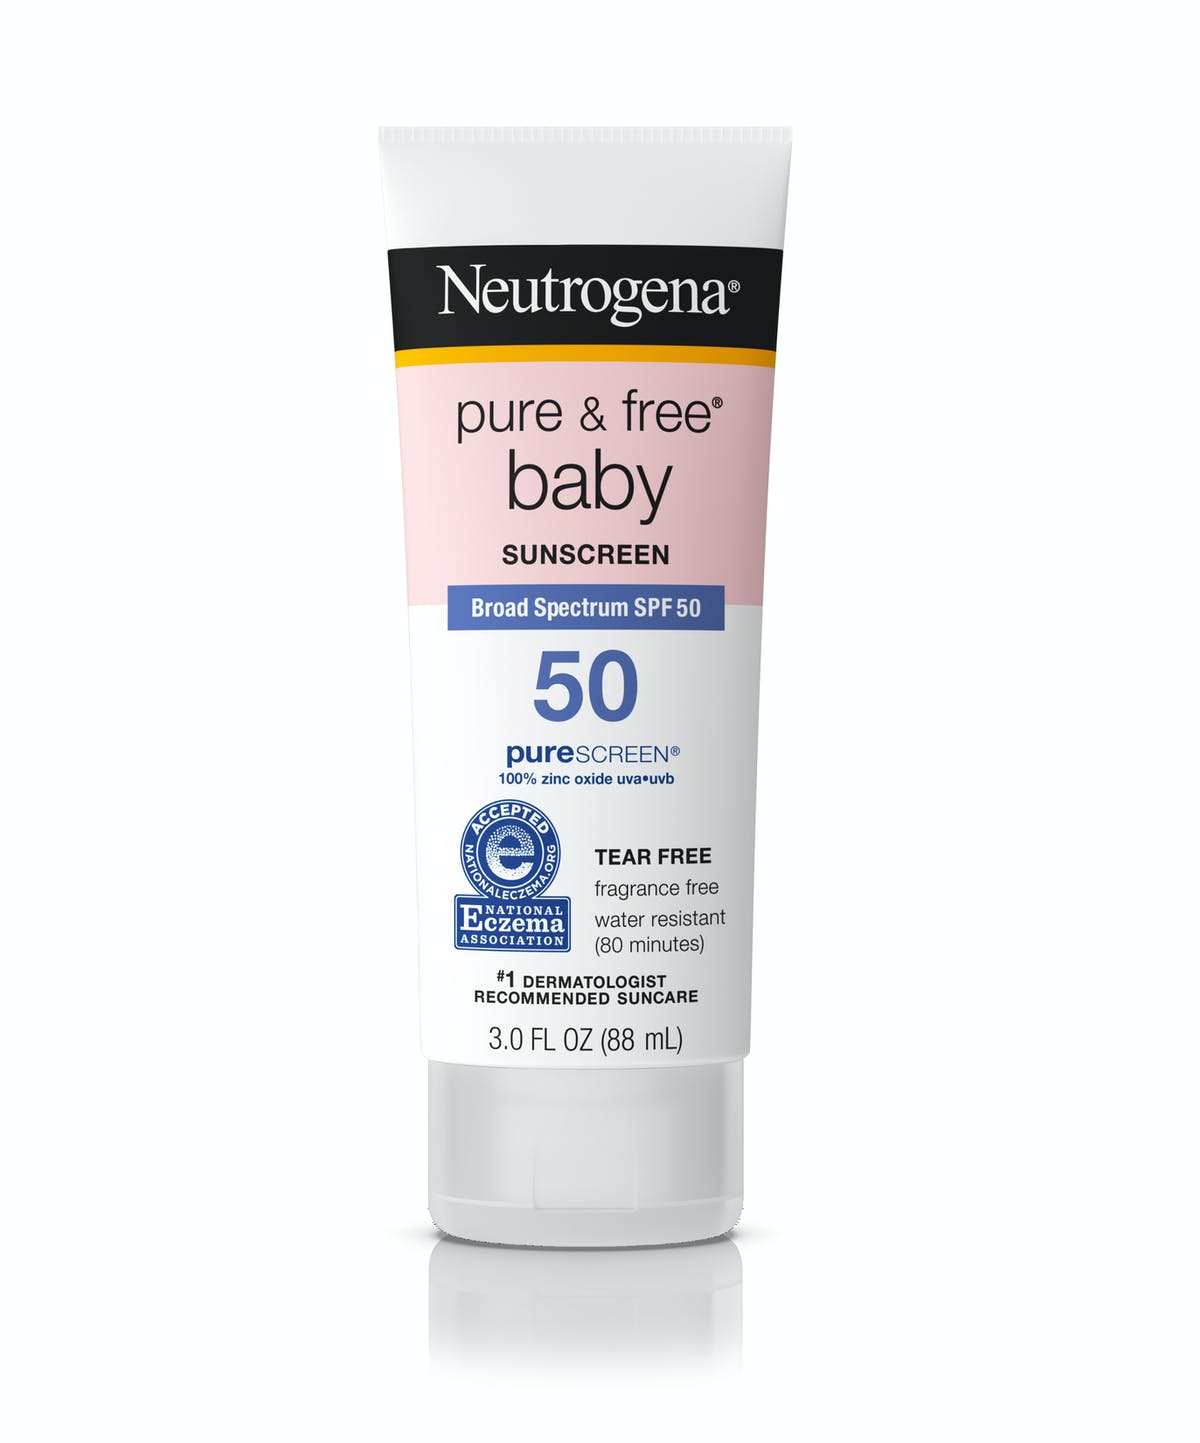 neutrogena baby sunscreen review